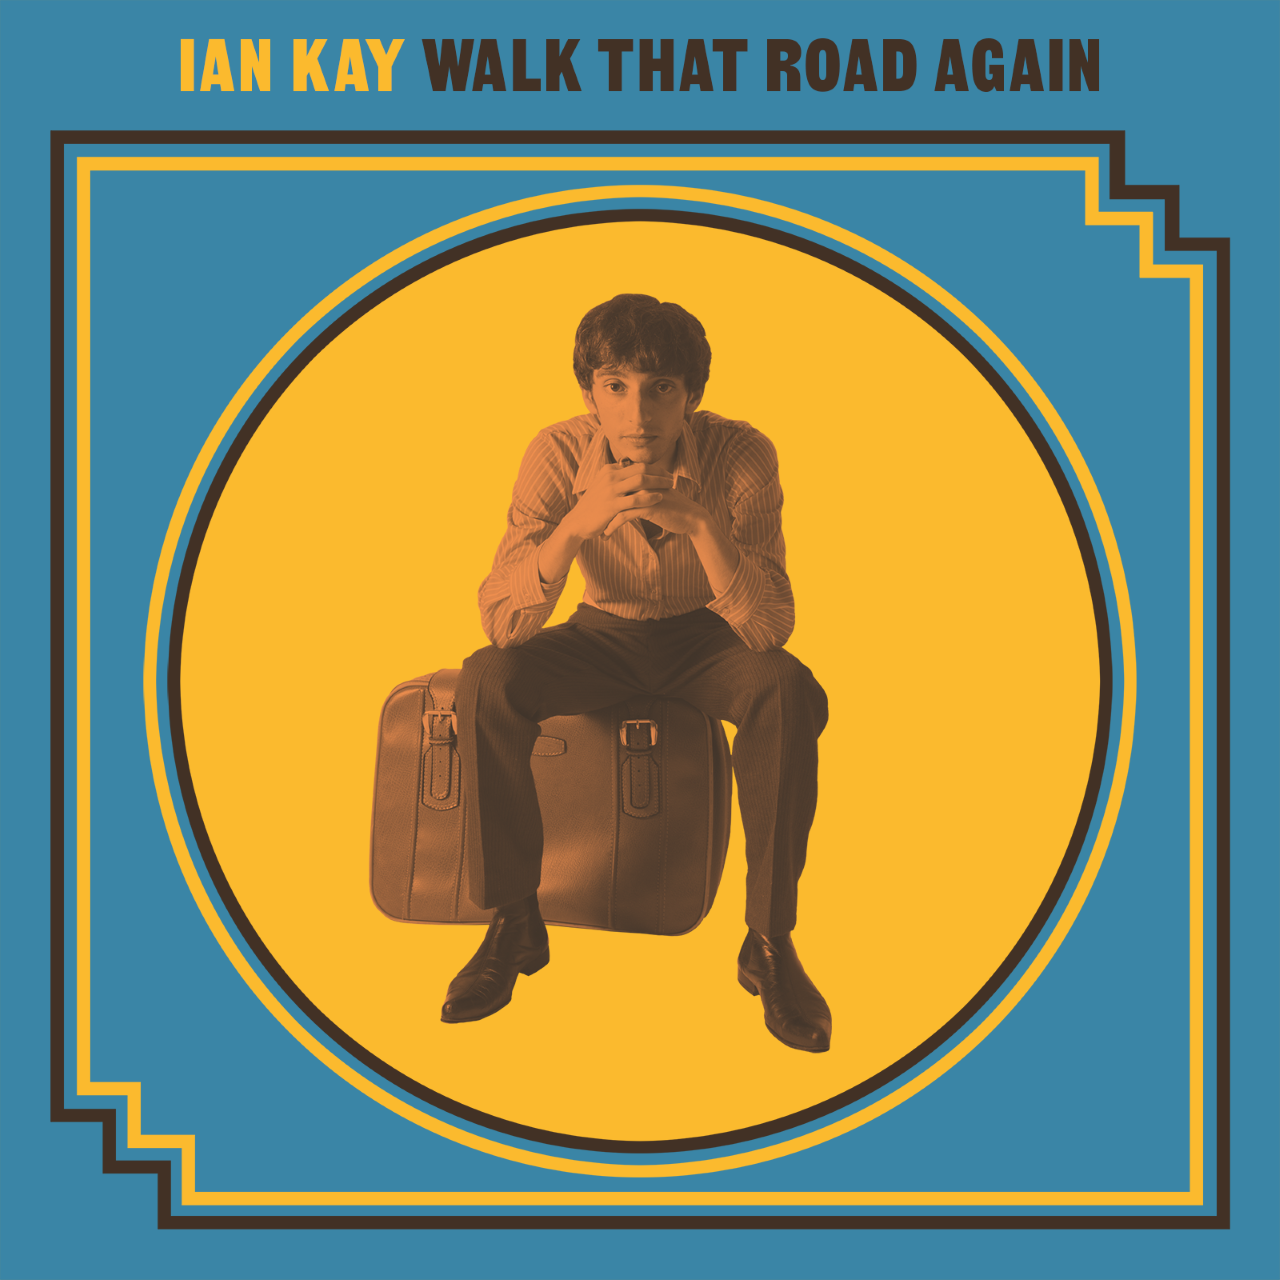 IAN KAY – “Walk that road again”